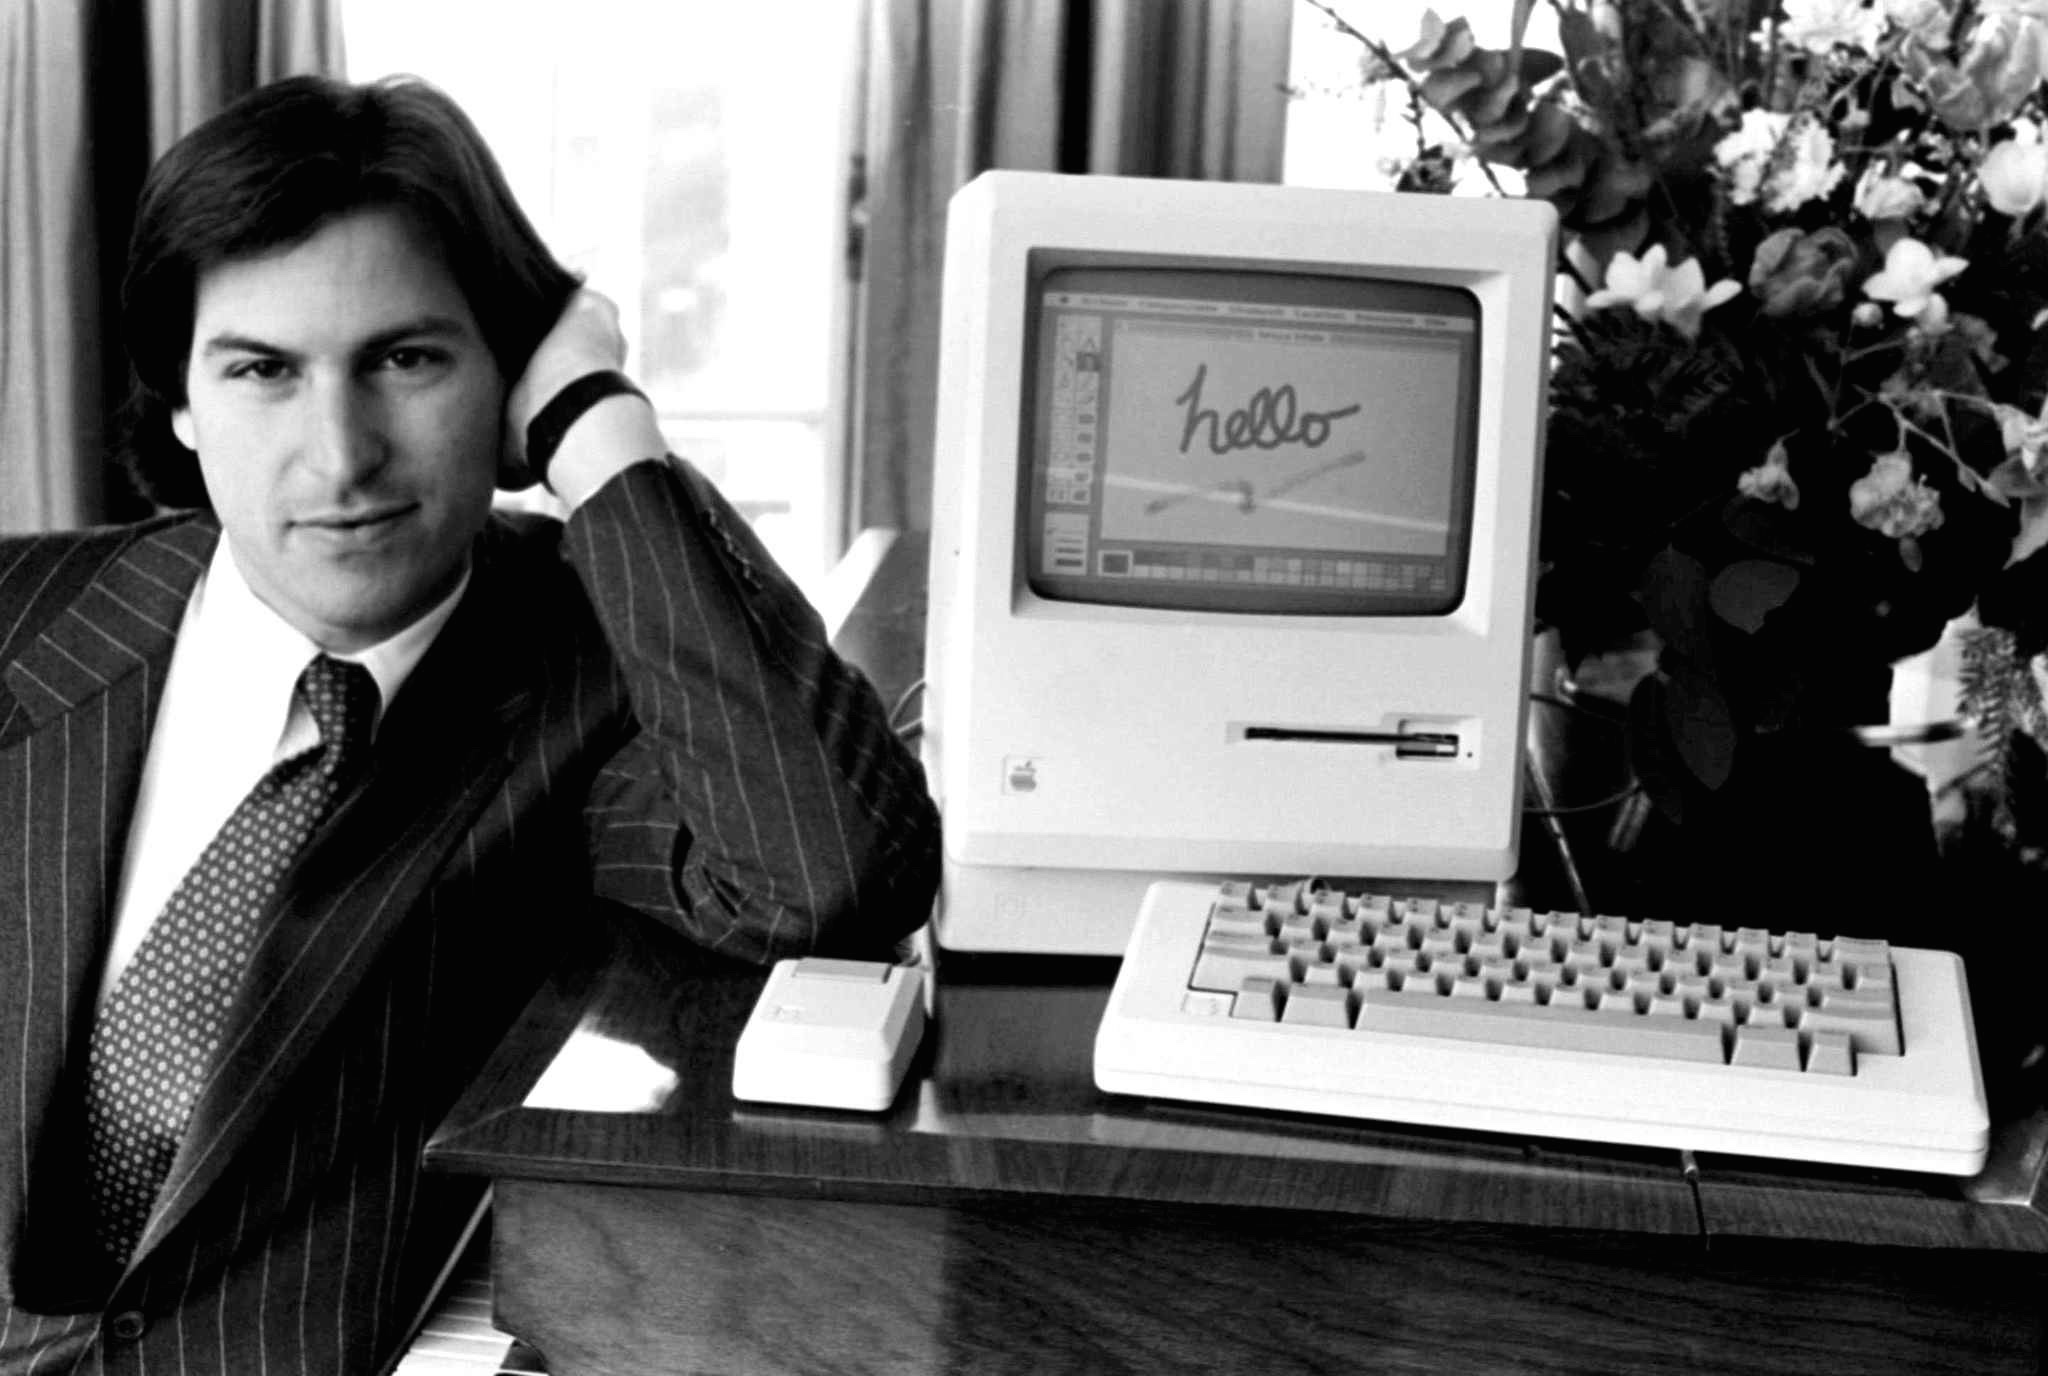 Macintosh | all about Steve Jobs.com